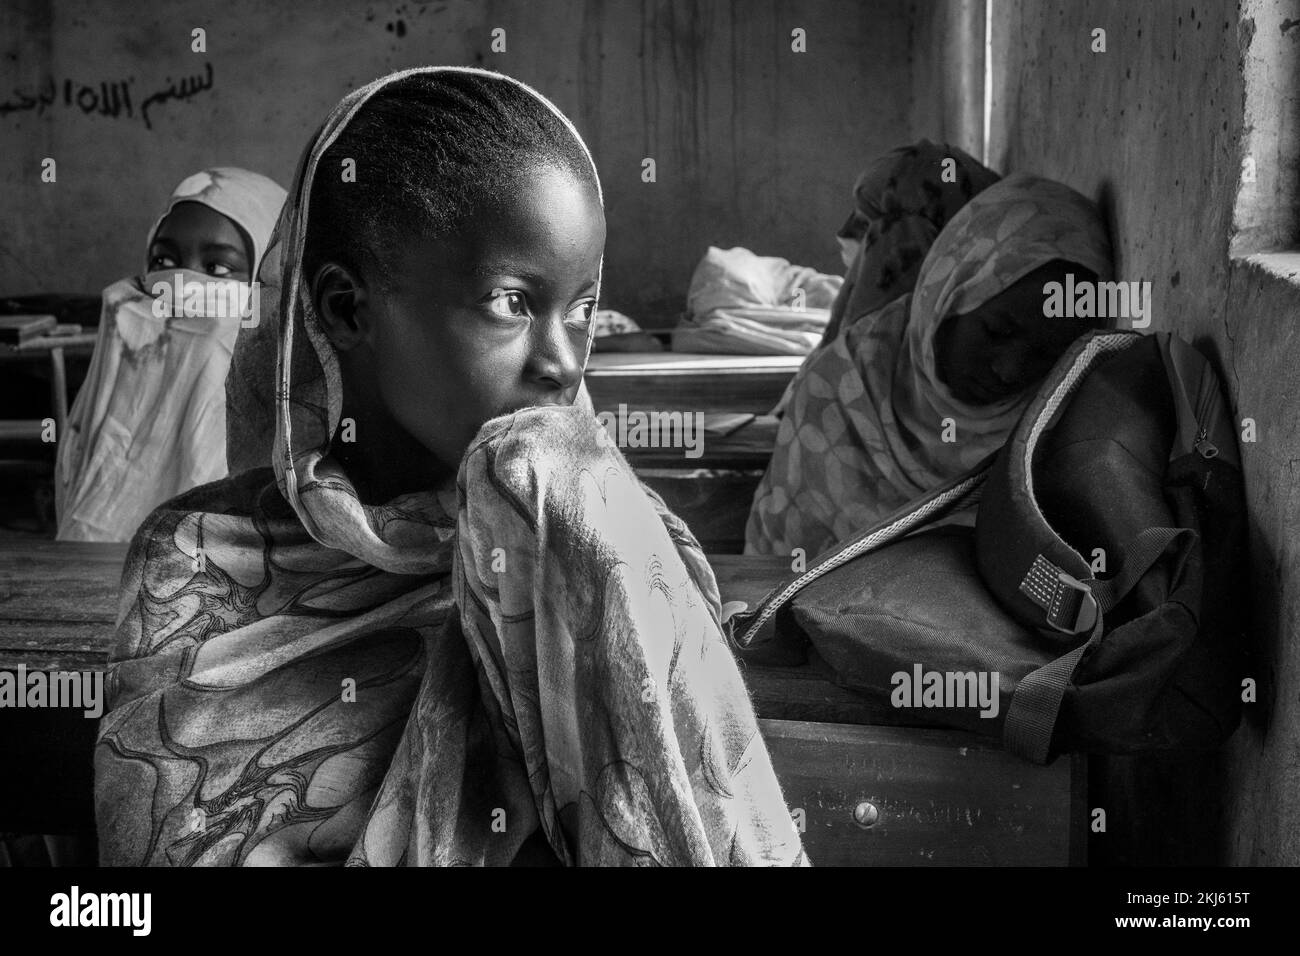 Mauritania, Chinguetti, Entkemkemt school Stock Photo